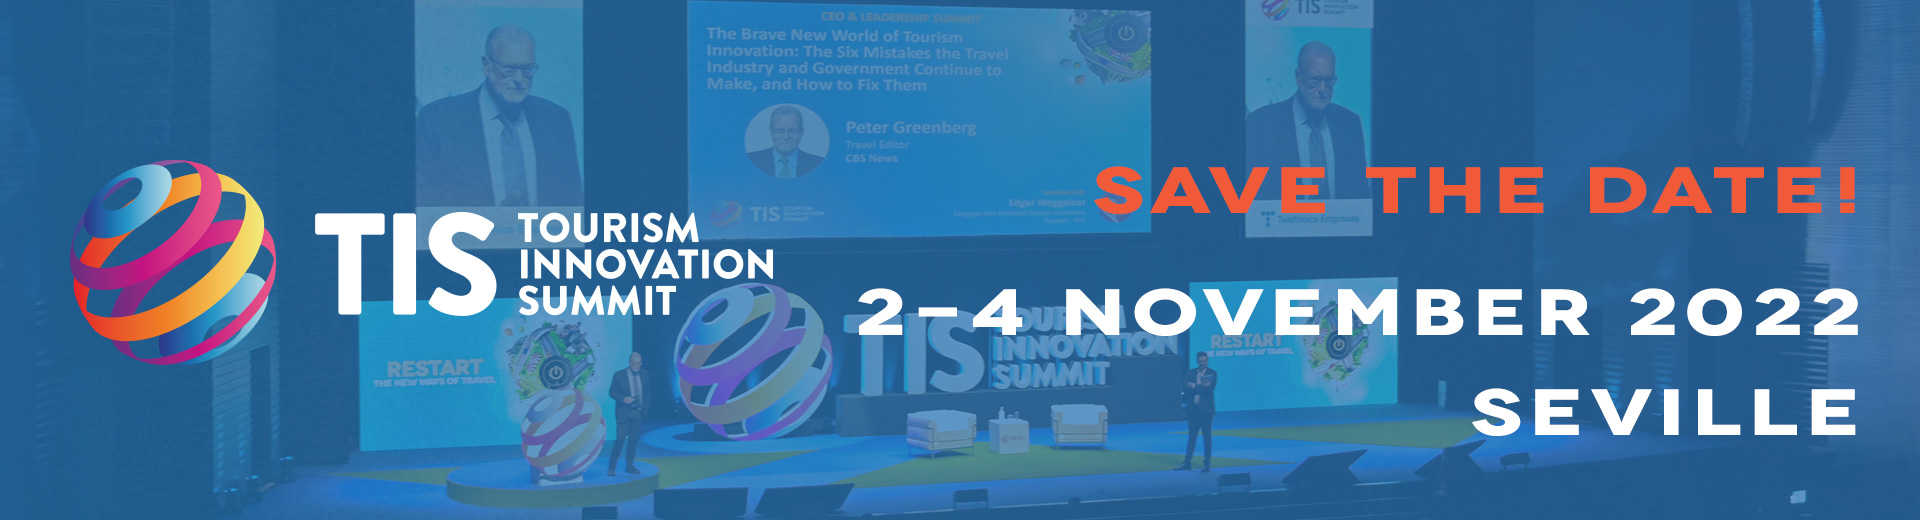 Tourism Innovation Summit -TIS